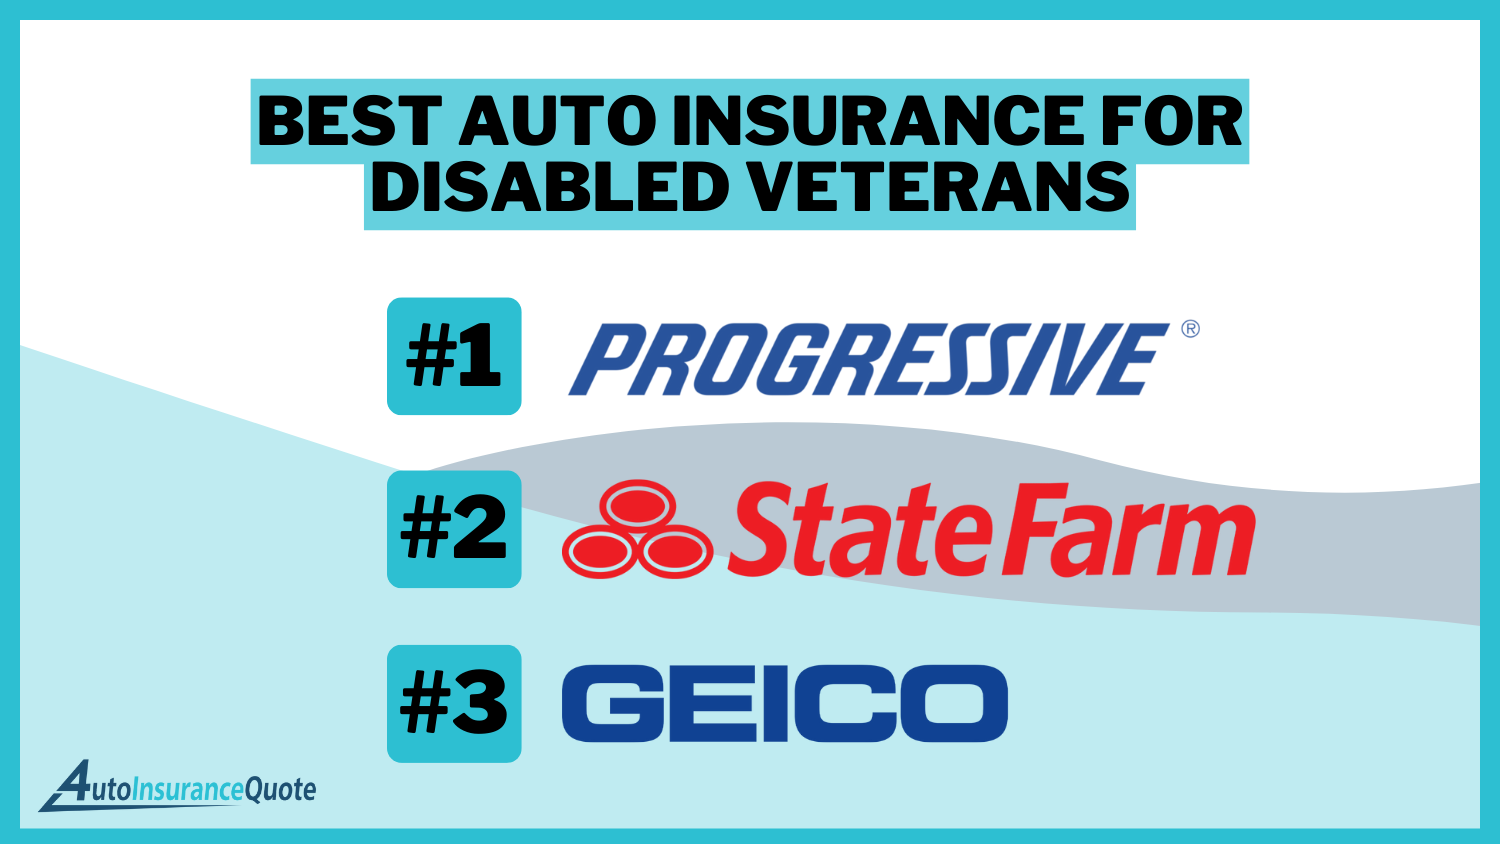 Best Auto Insurance for Disabled Veterans: Progressive, State Farm, Geico